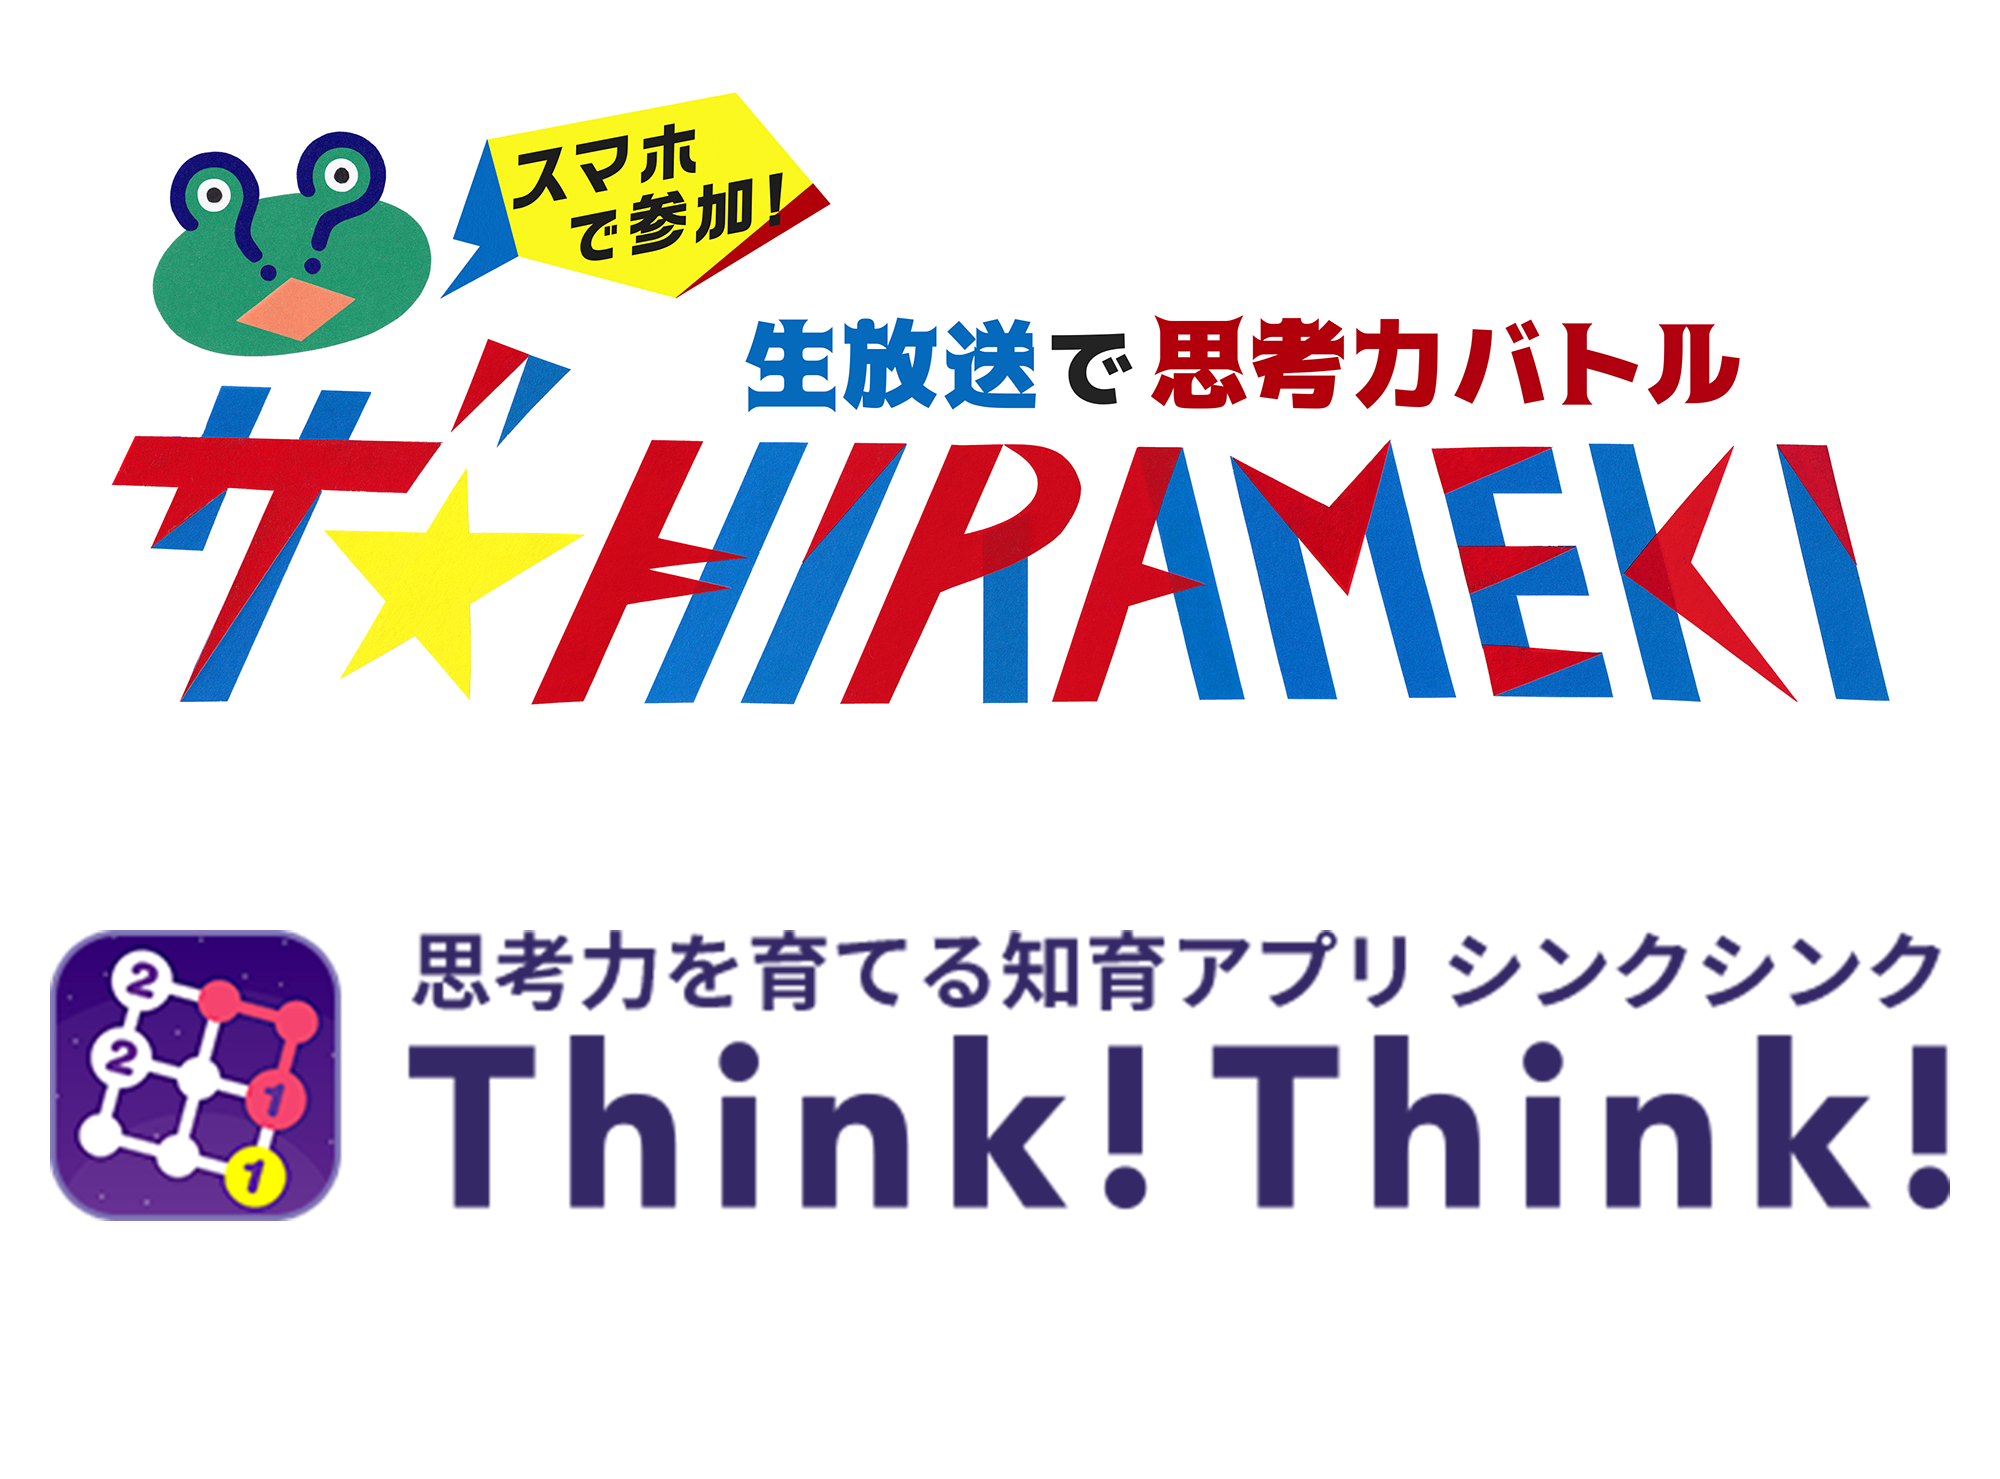 Tbsクイズ特番 ザ Hirameki に思考力育成アプリ シンクシンク が全面協力 出題される全問題をワンダーラボが提供 視聴者がリアルタイムで参加できる 地上波初の試みも ワンダーラボ株式会社のプレスリリース